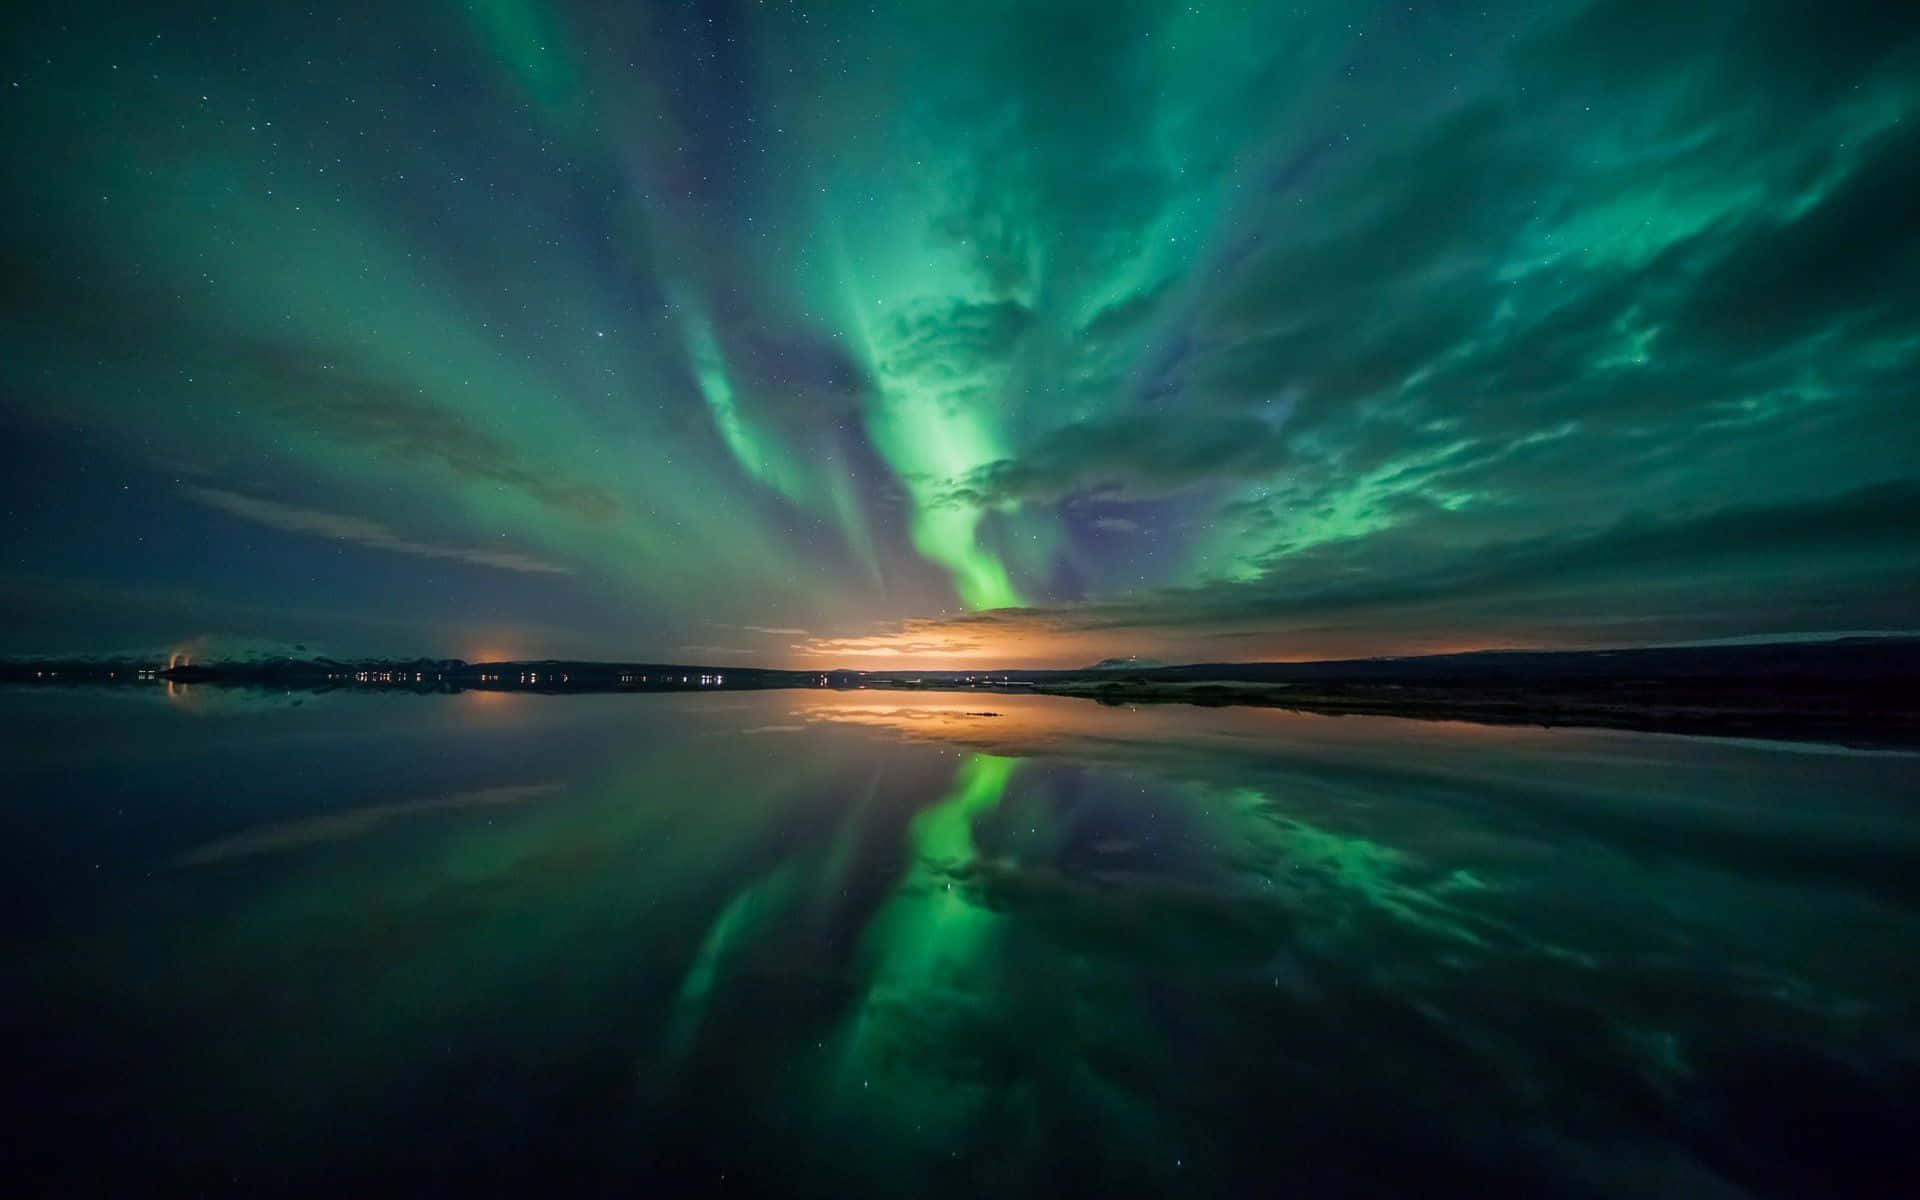 Magical Aurora Borealis lights up the night sky